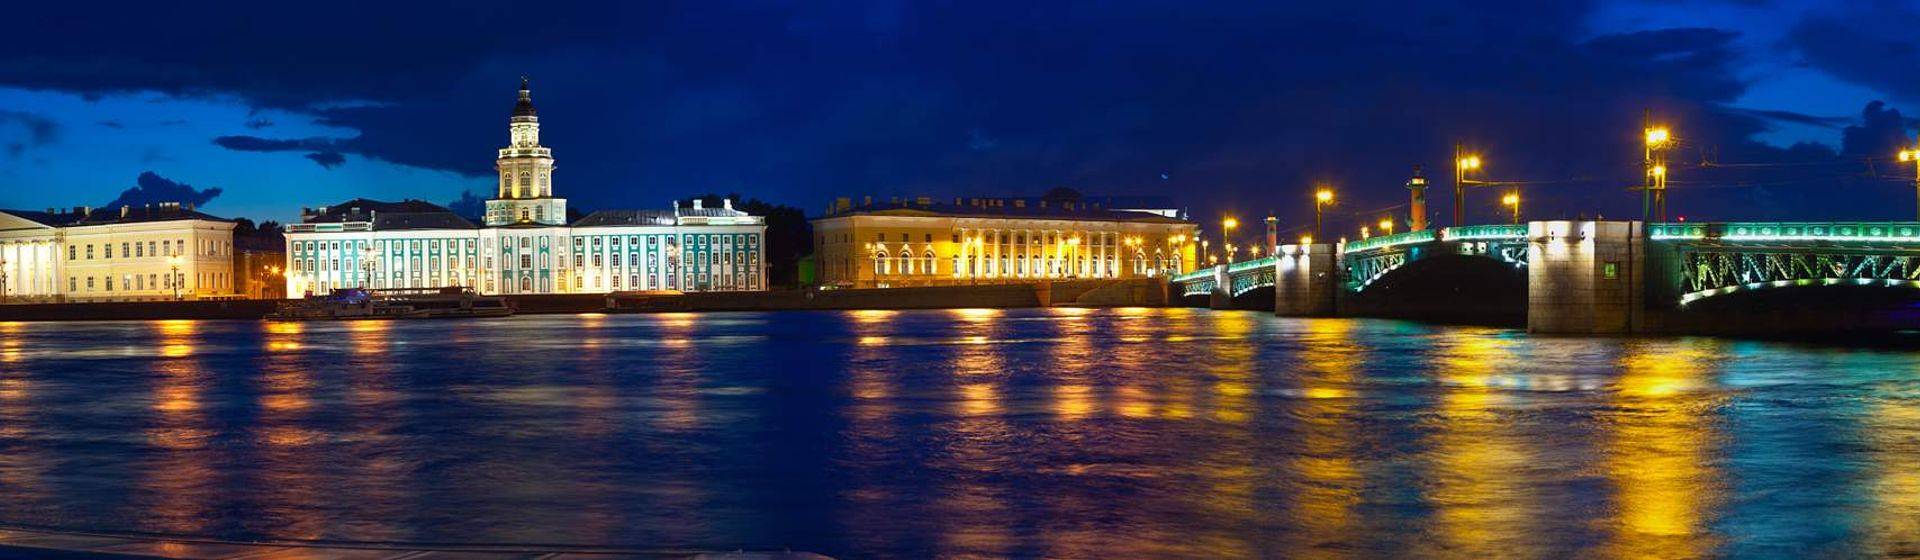 Holidays to St Petersburg Image